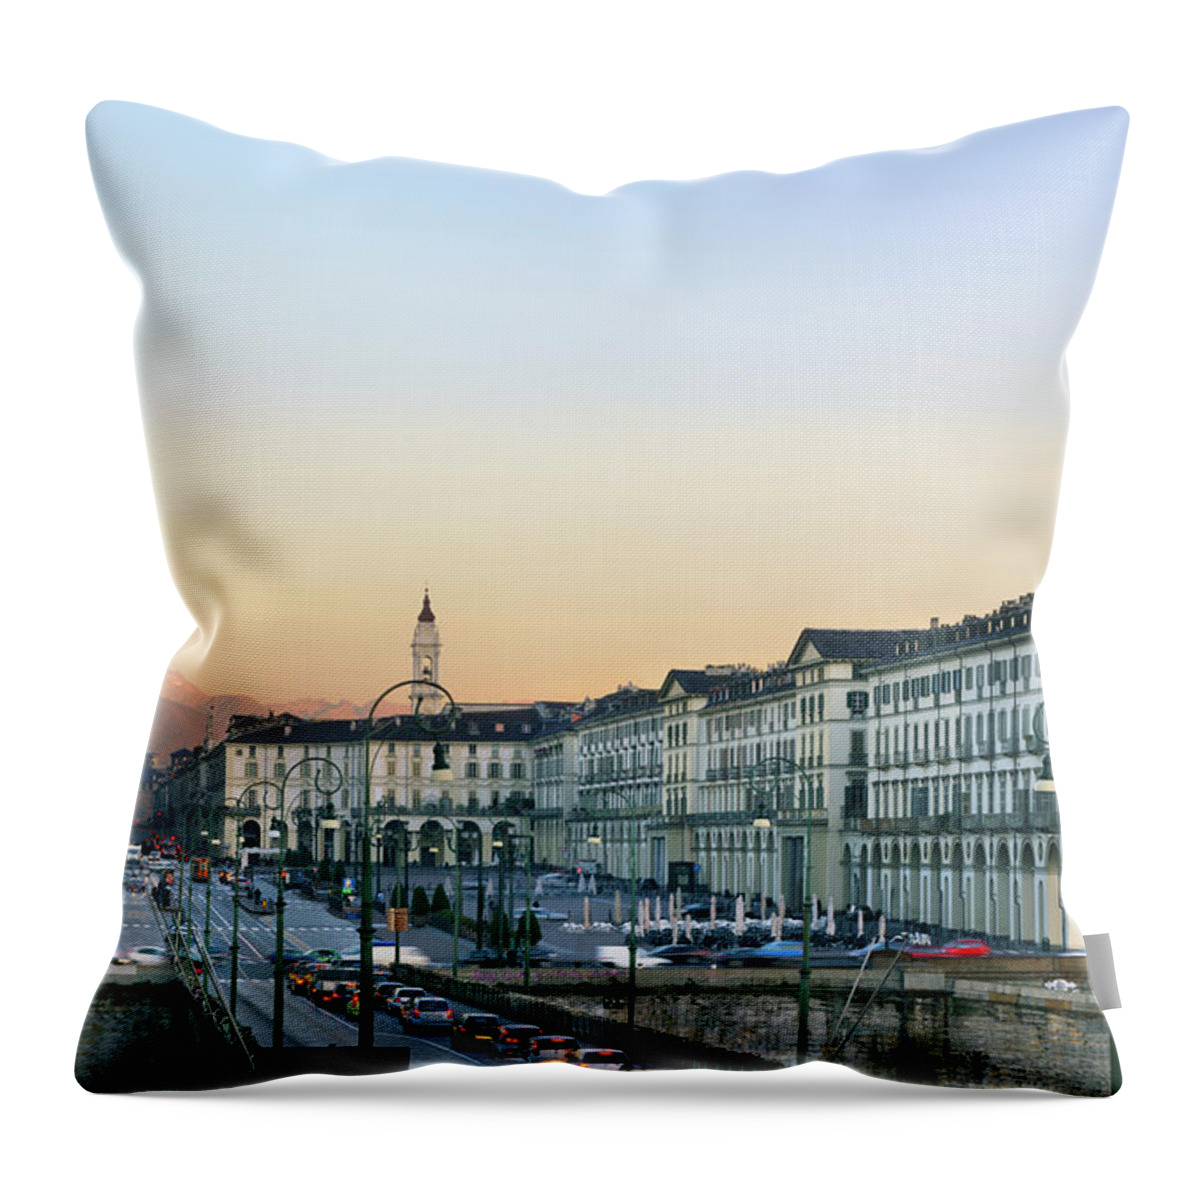 Blurred Motion Throw Pillow featuring the photograph Vittorio Emanuele Square, Mole by Darioegidi